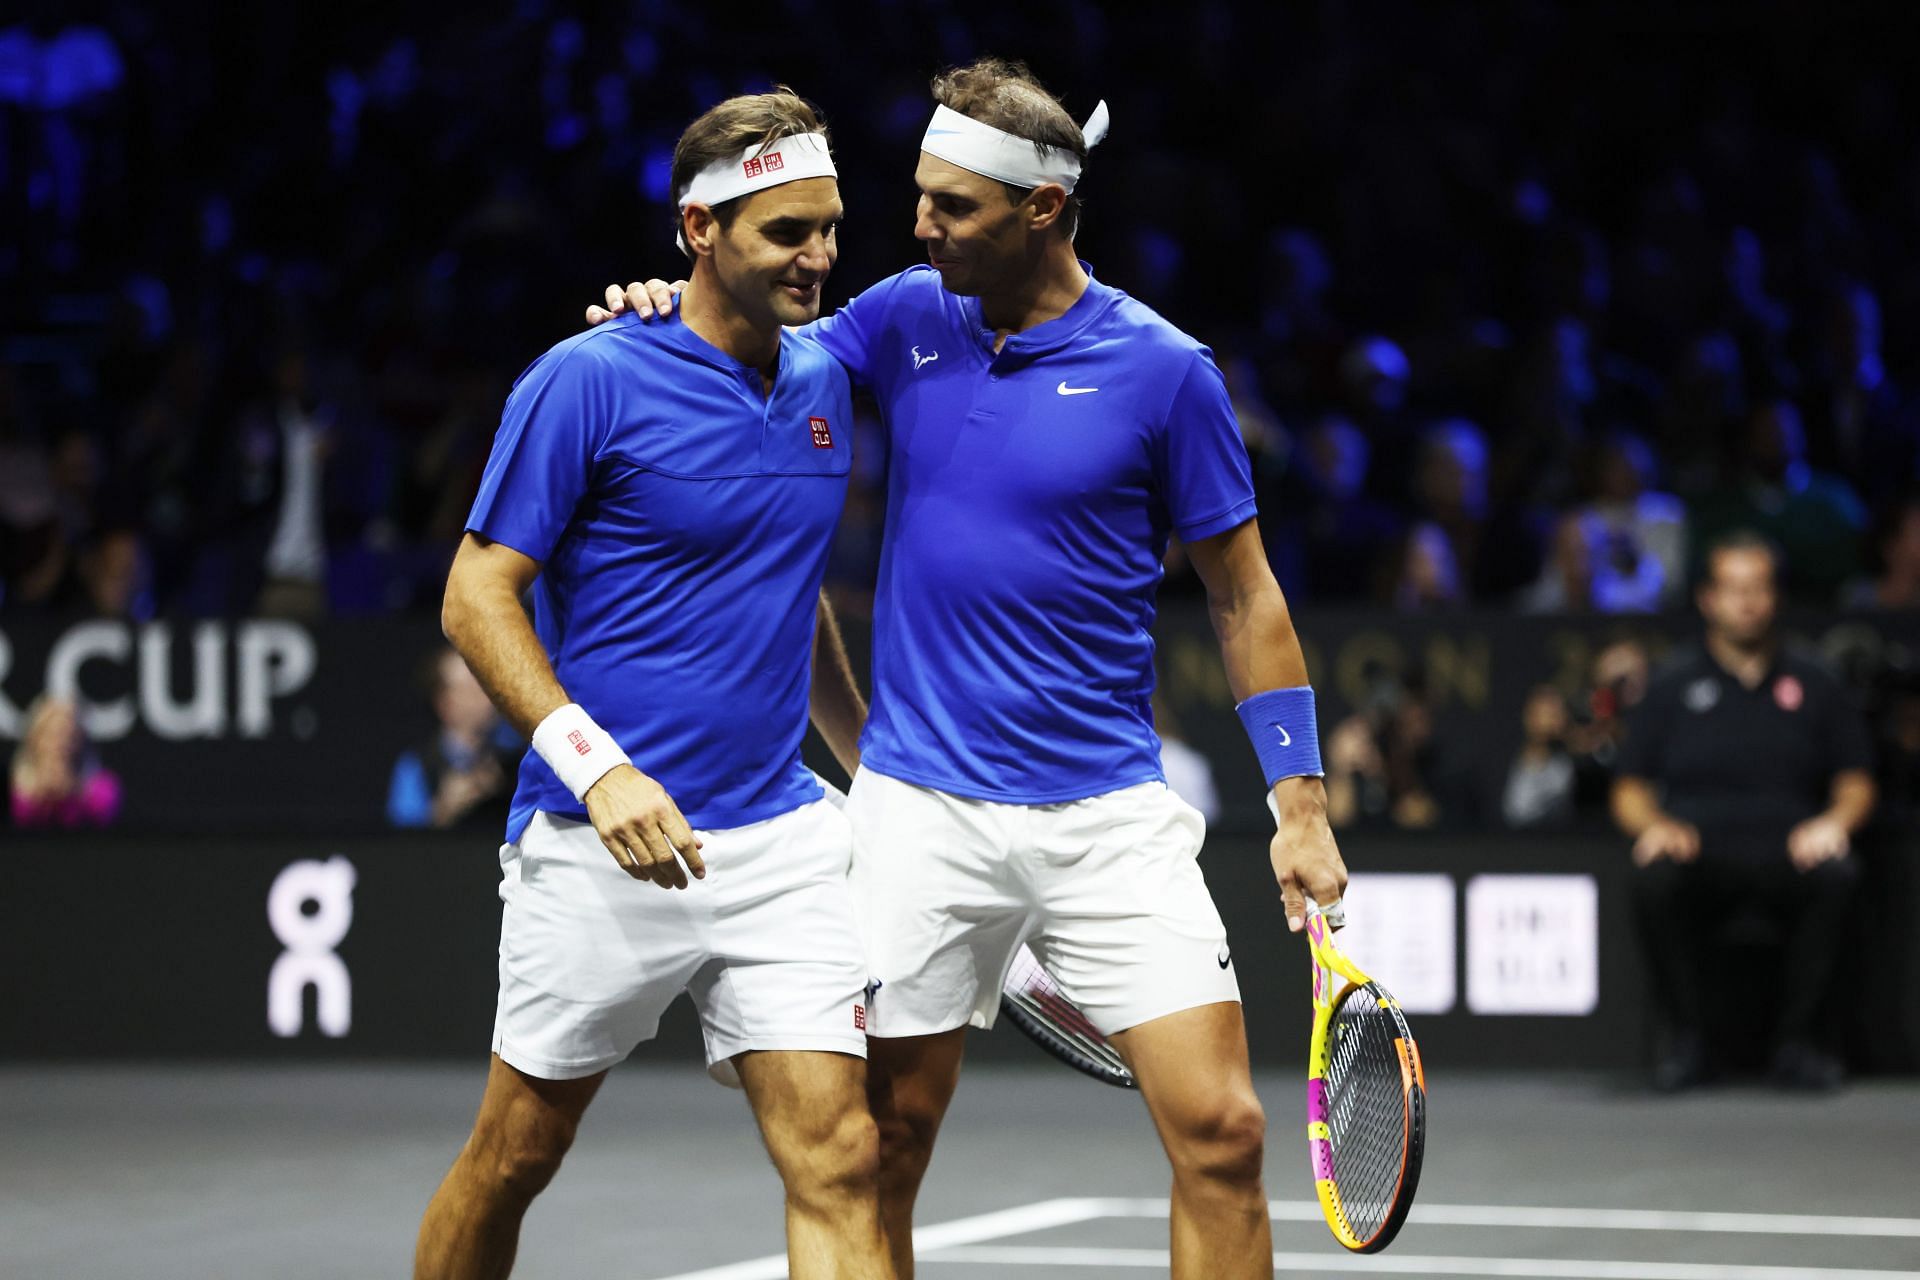 Roger Federer played the final match of his career alongside Rafael Nadal